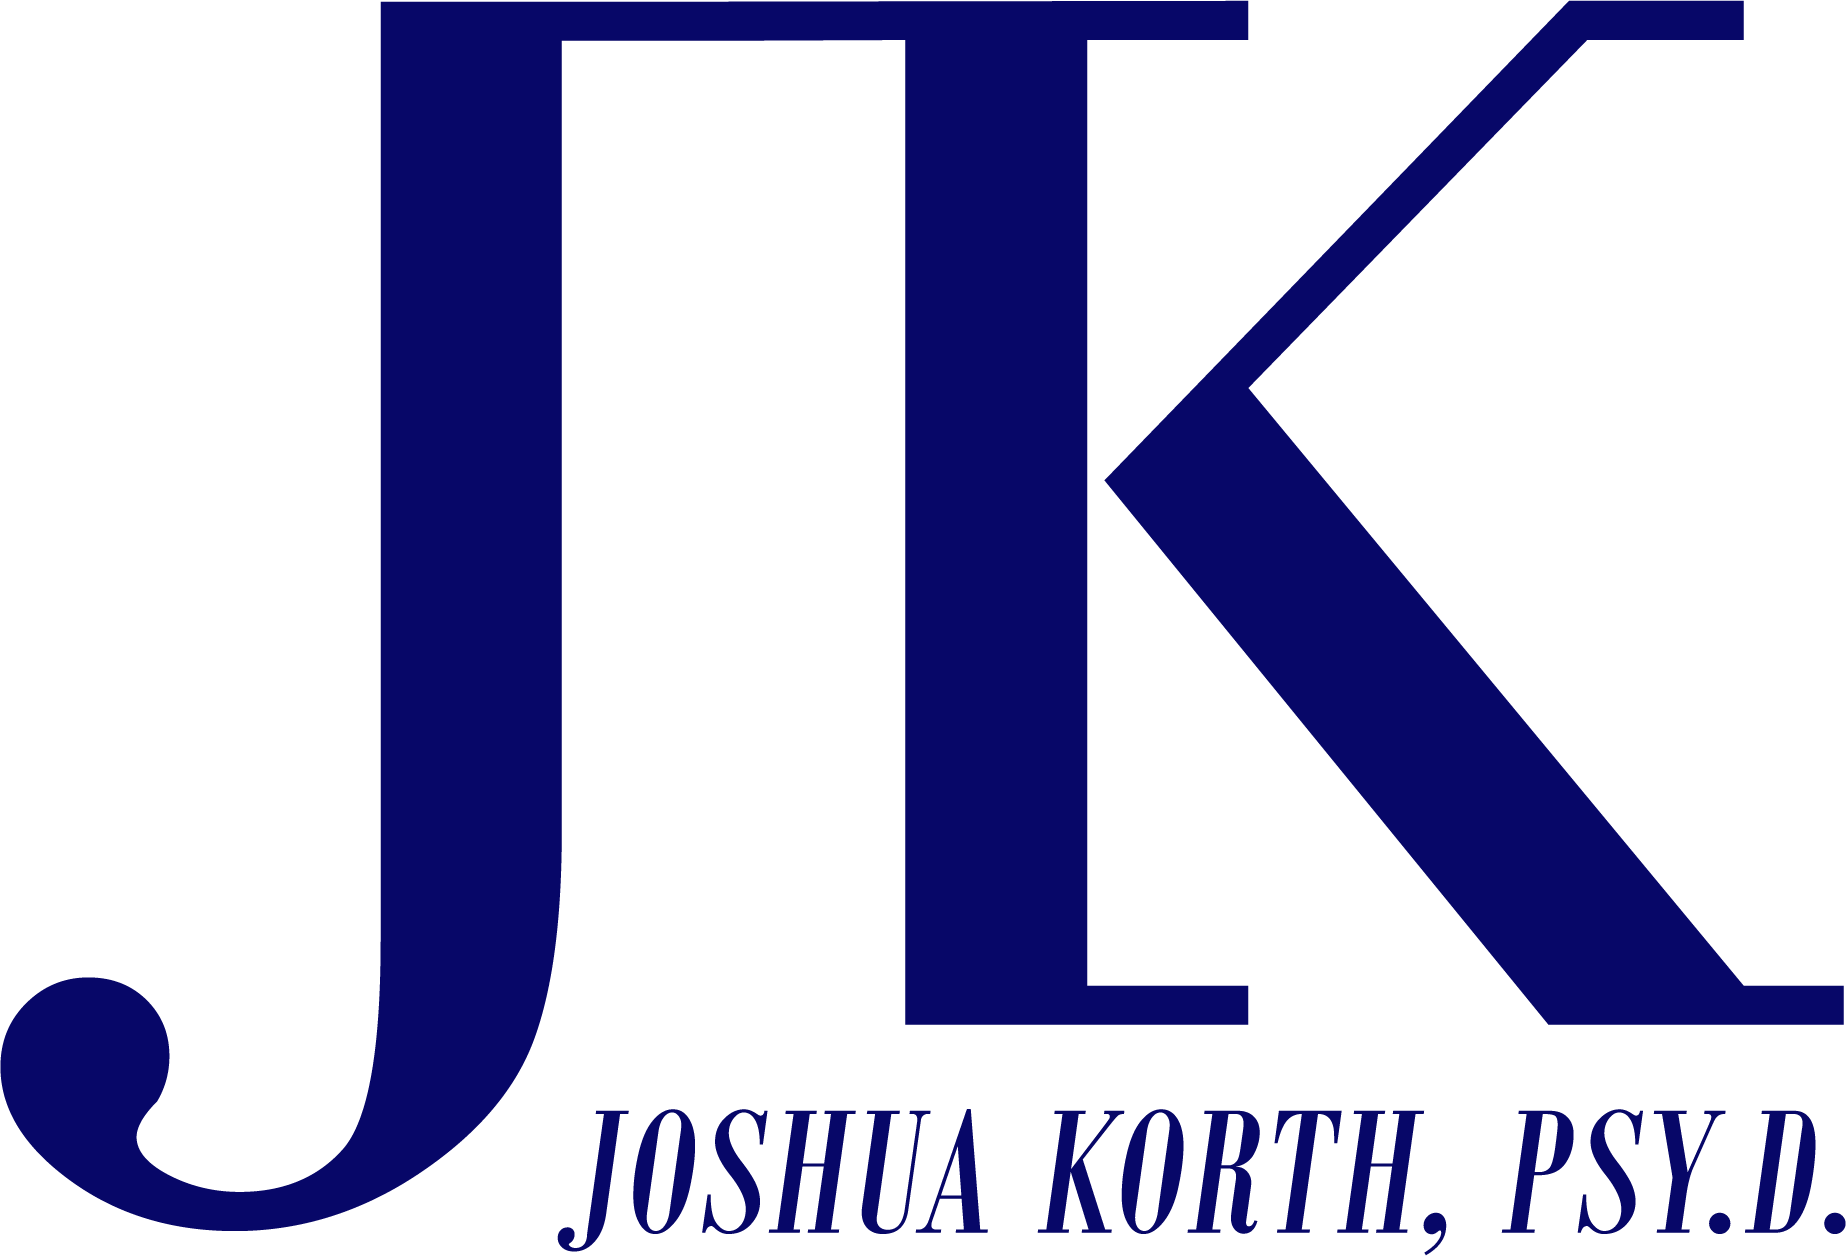 Joshua Korth